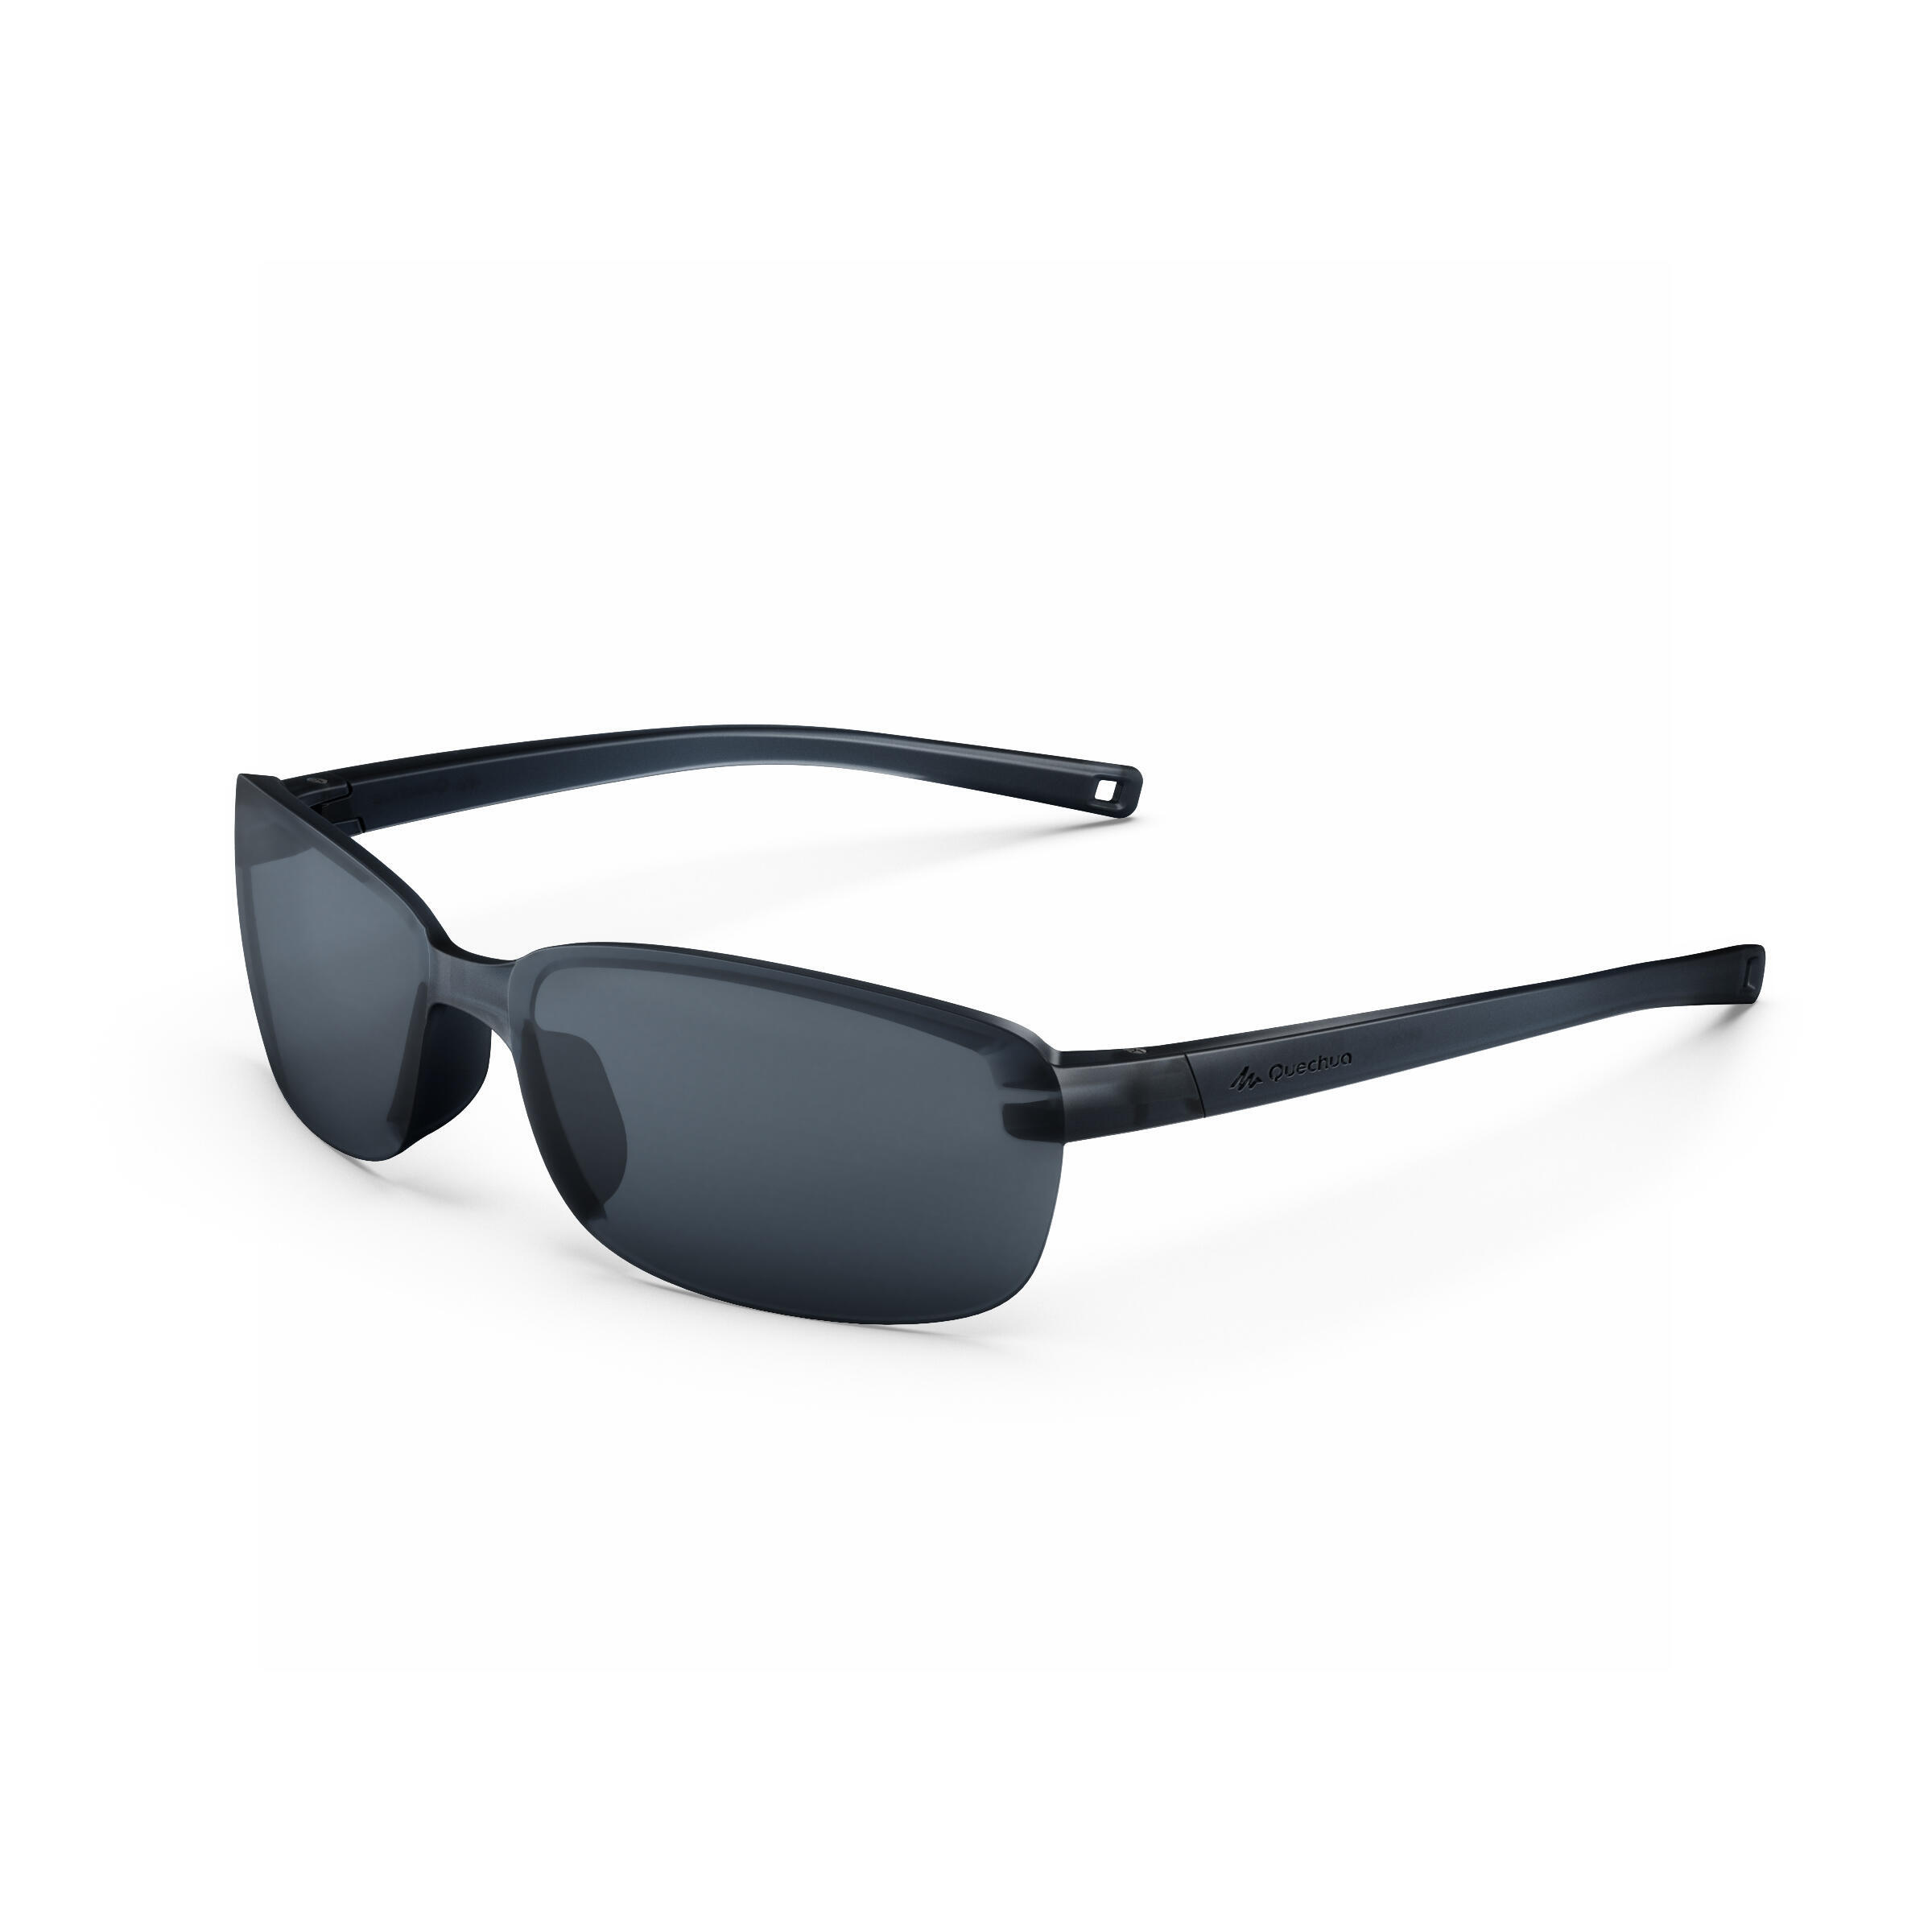 Adult Polarised Hiking Sunglasses - MH100 - Category 3 1/10